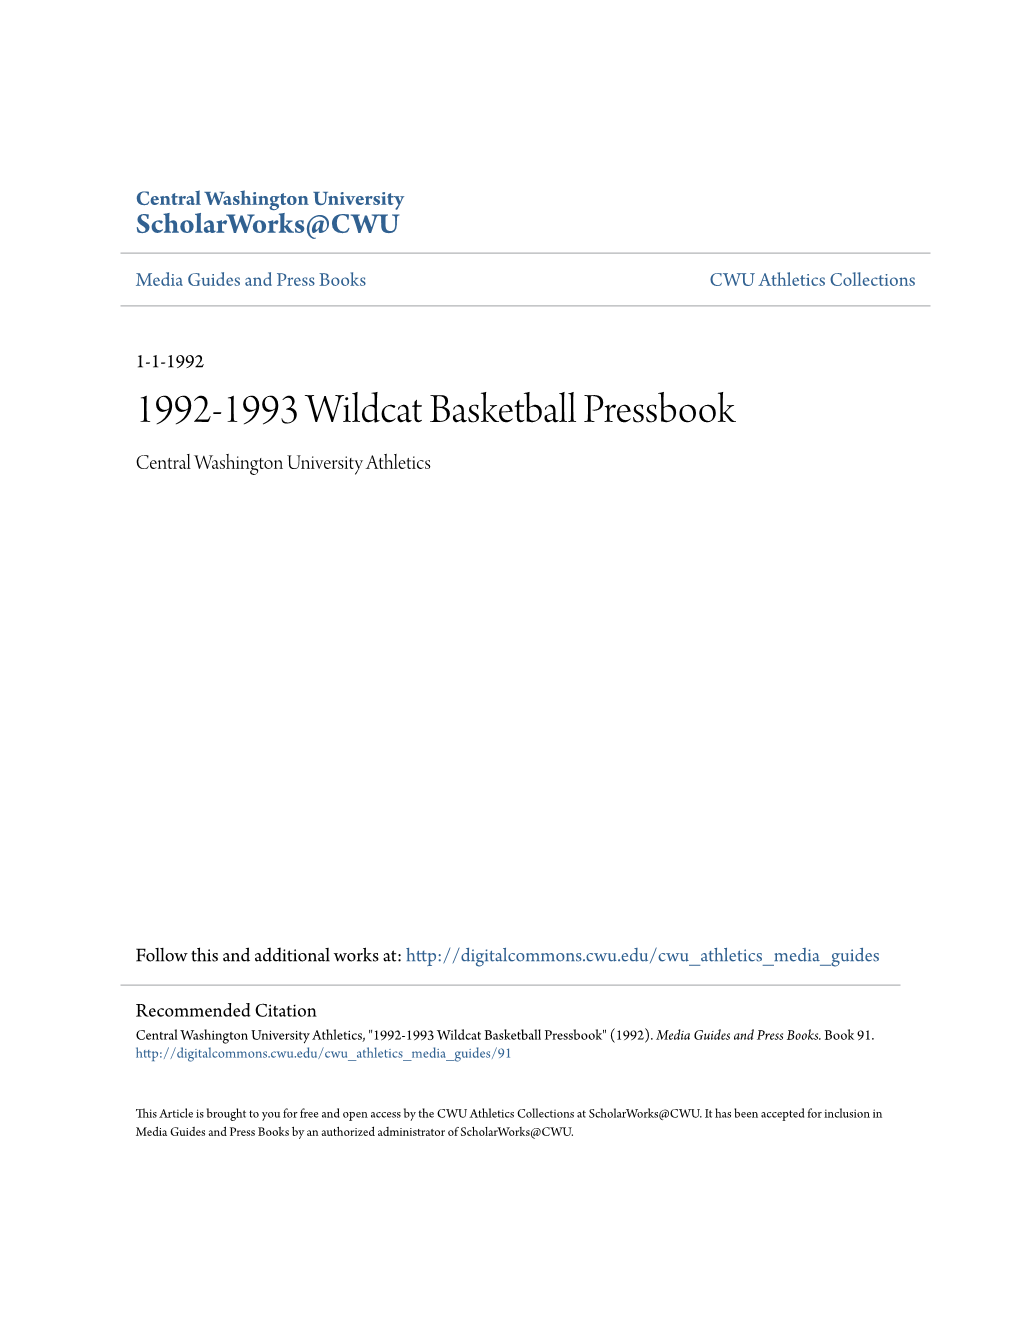 1992-1993 Wildcat Basketball Pressbook Central Washington University Athletics